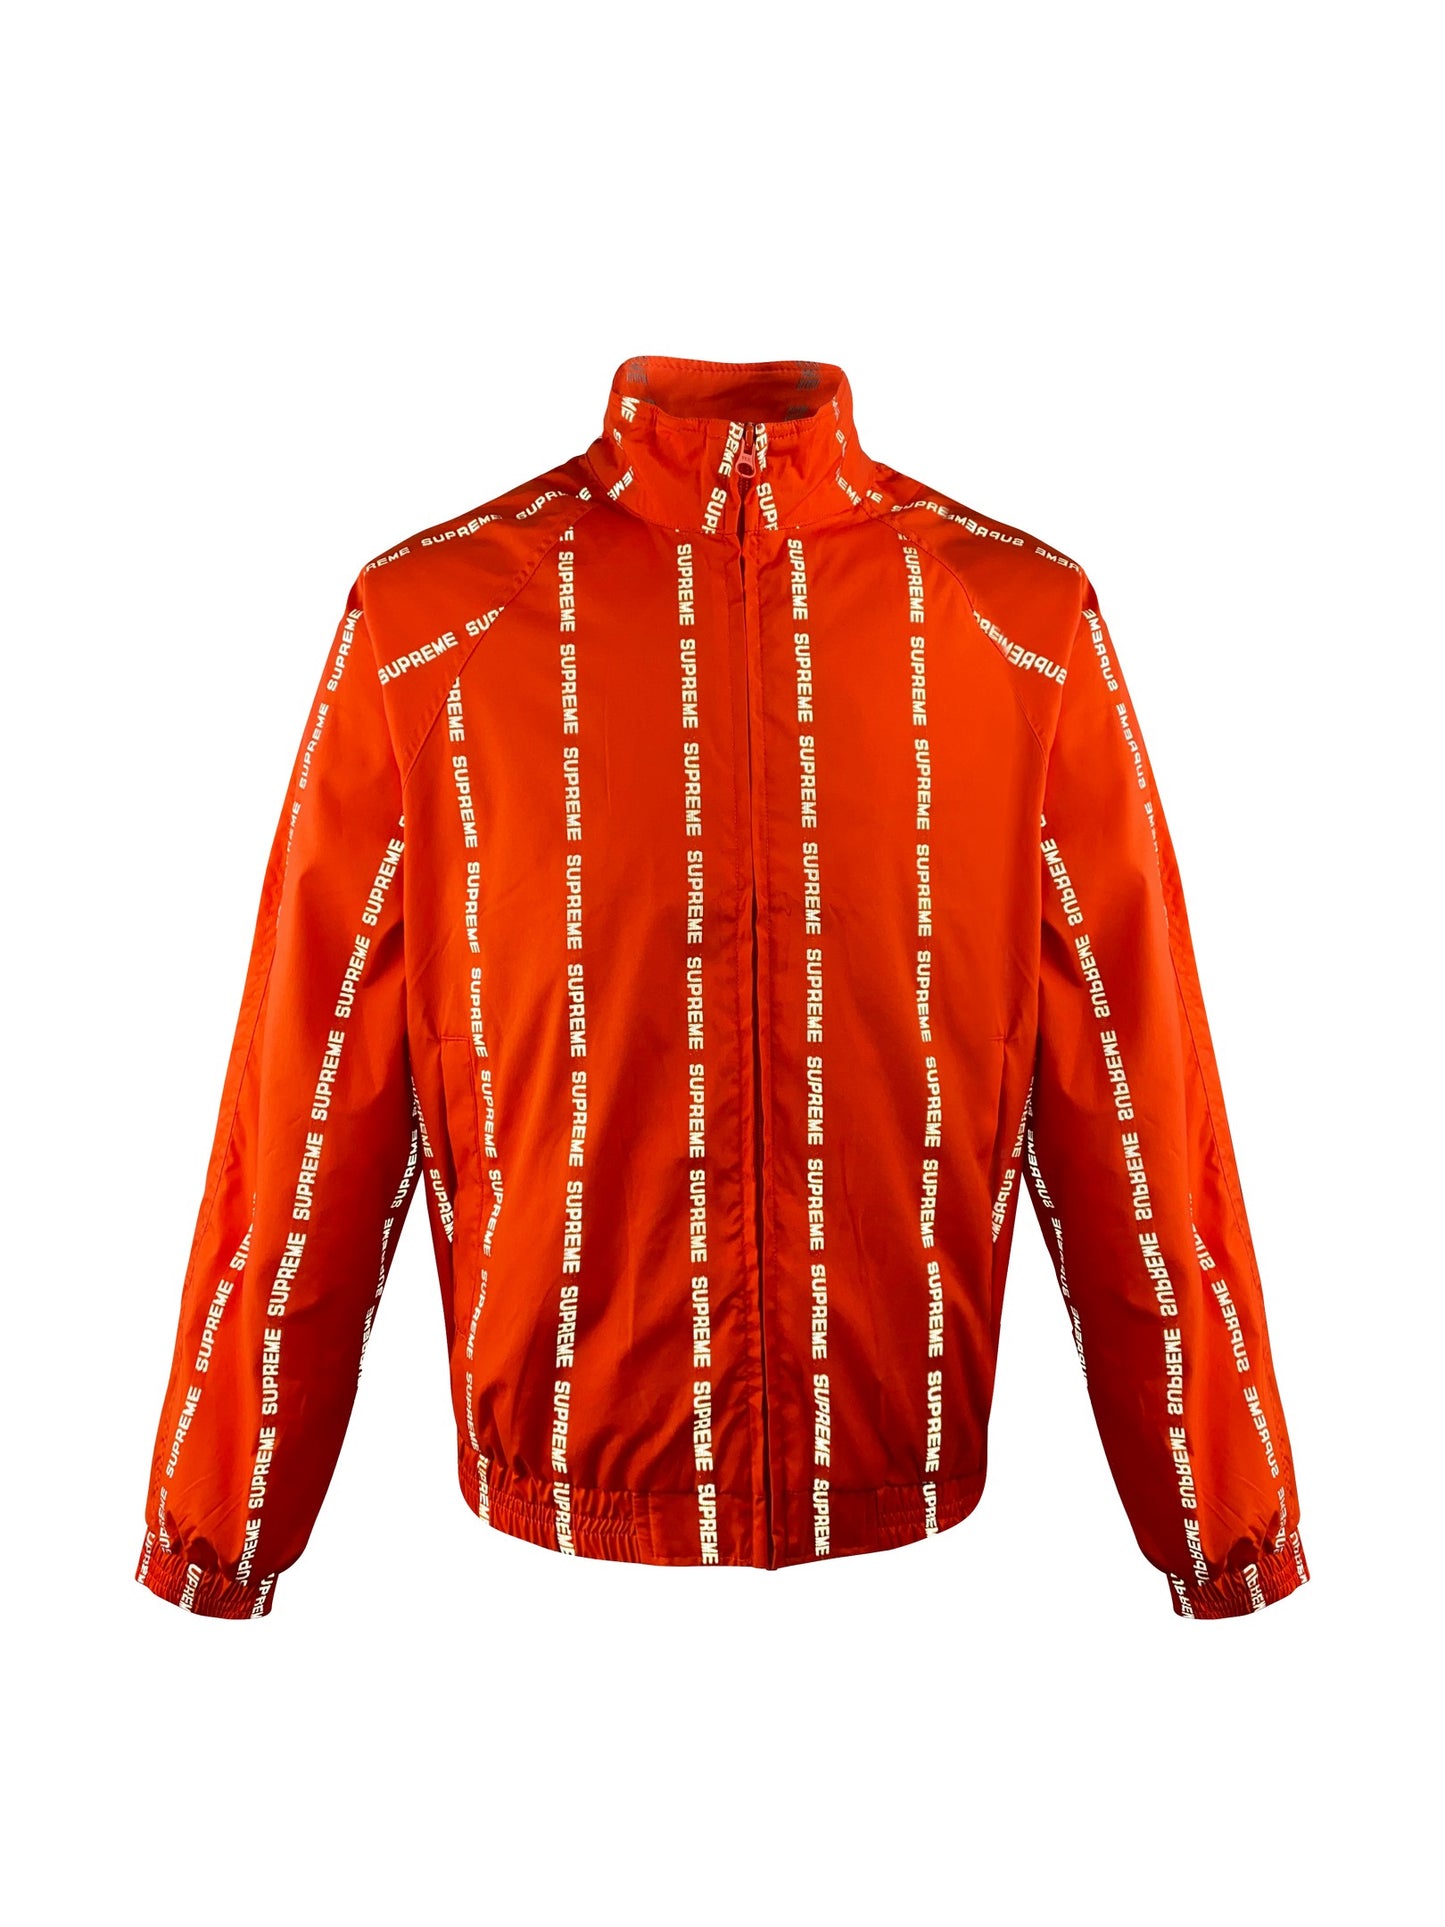 Supreme Jacke “Reflective Text Track Jacket” - orange